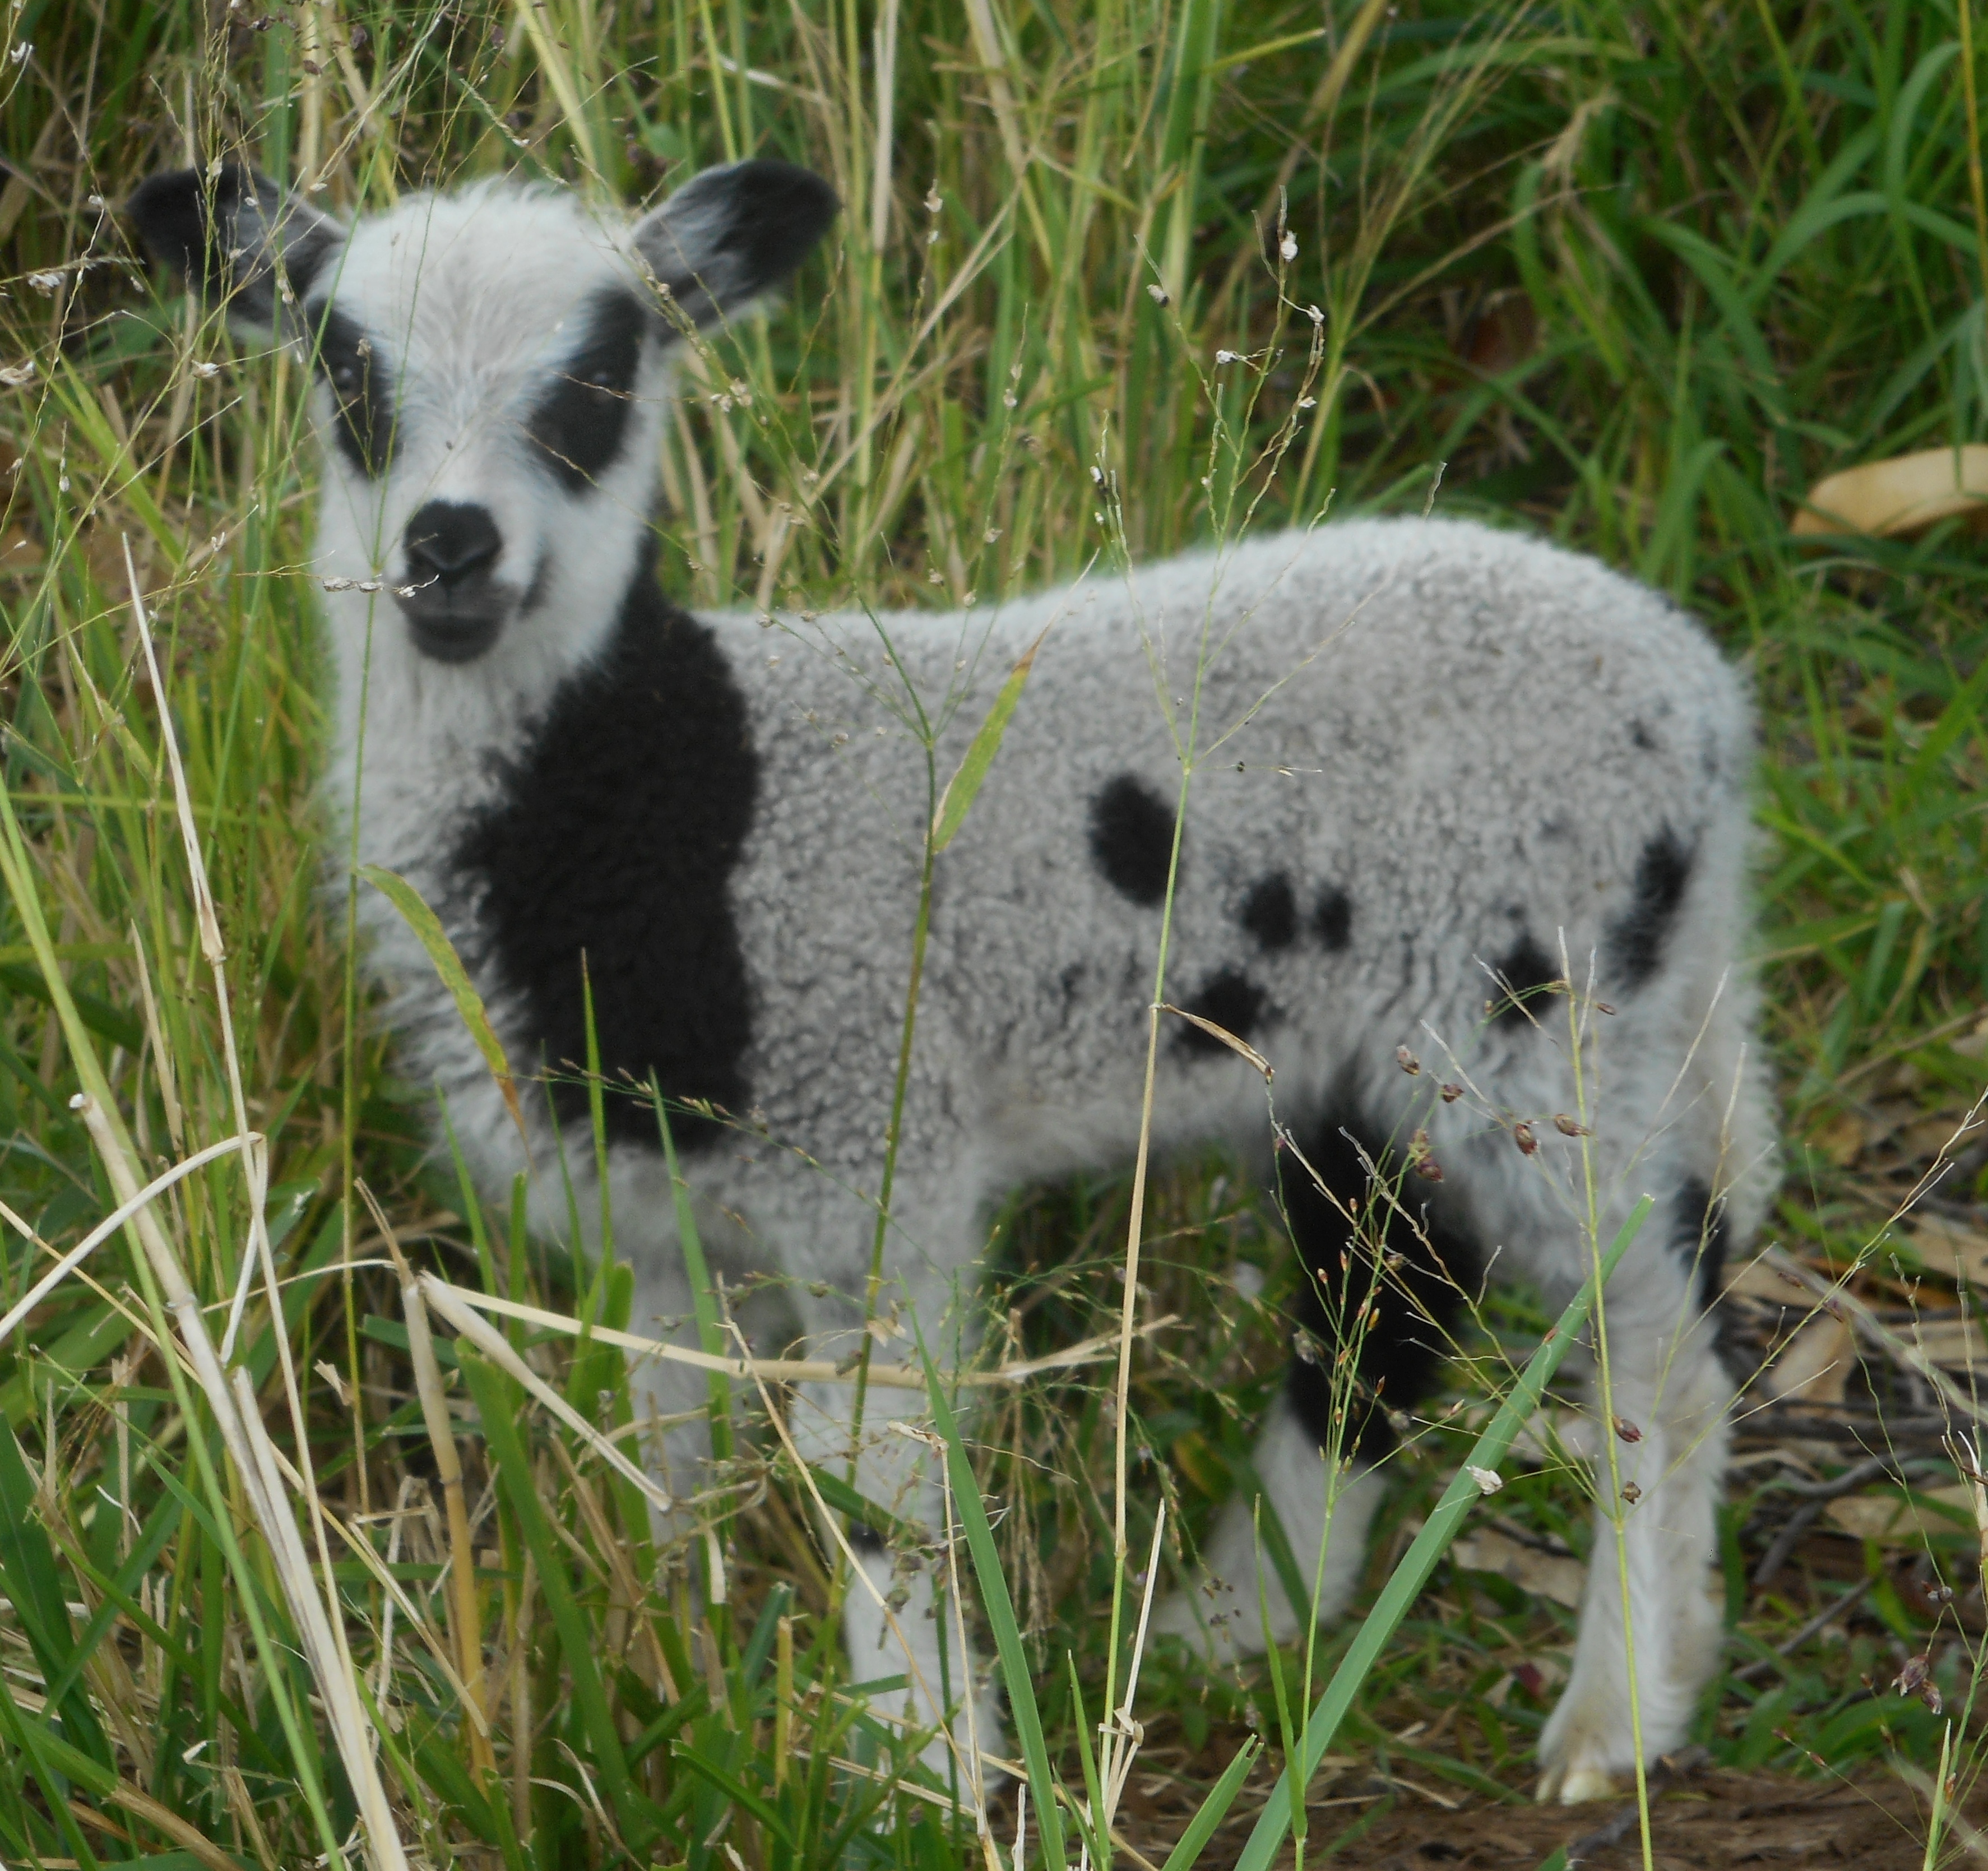 May's 1st born lamb